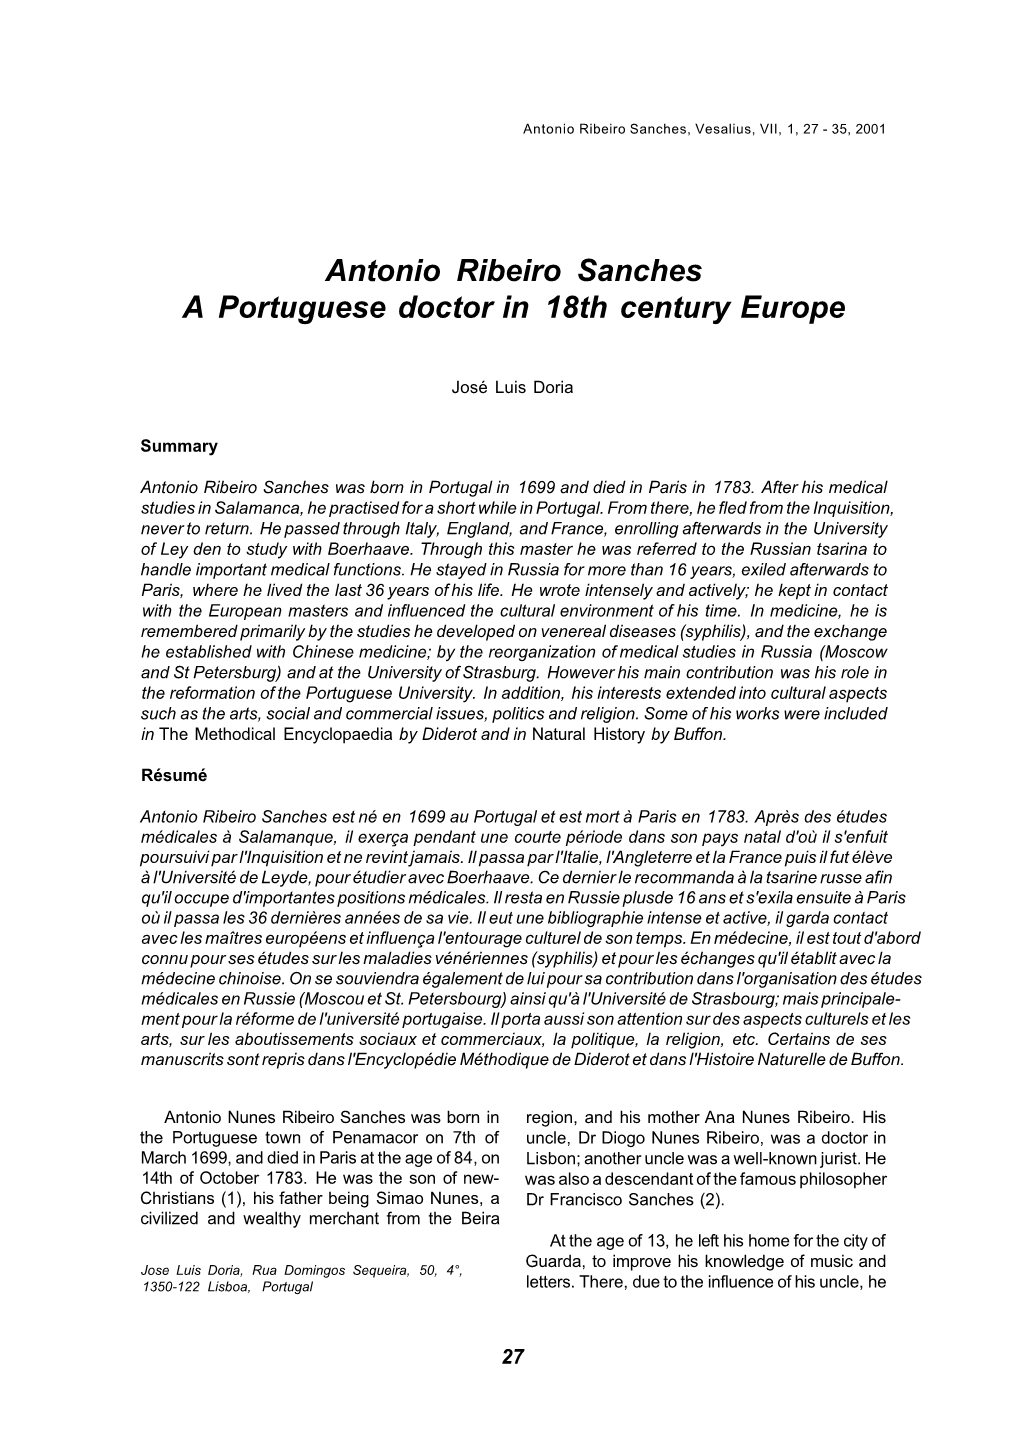 Antonio Ribeiro Sanches a Portuguese Doctor in 18Th Century Europe